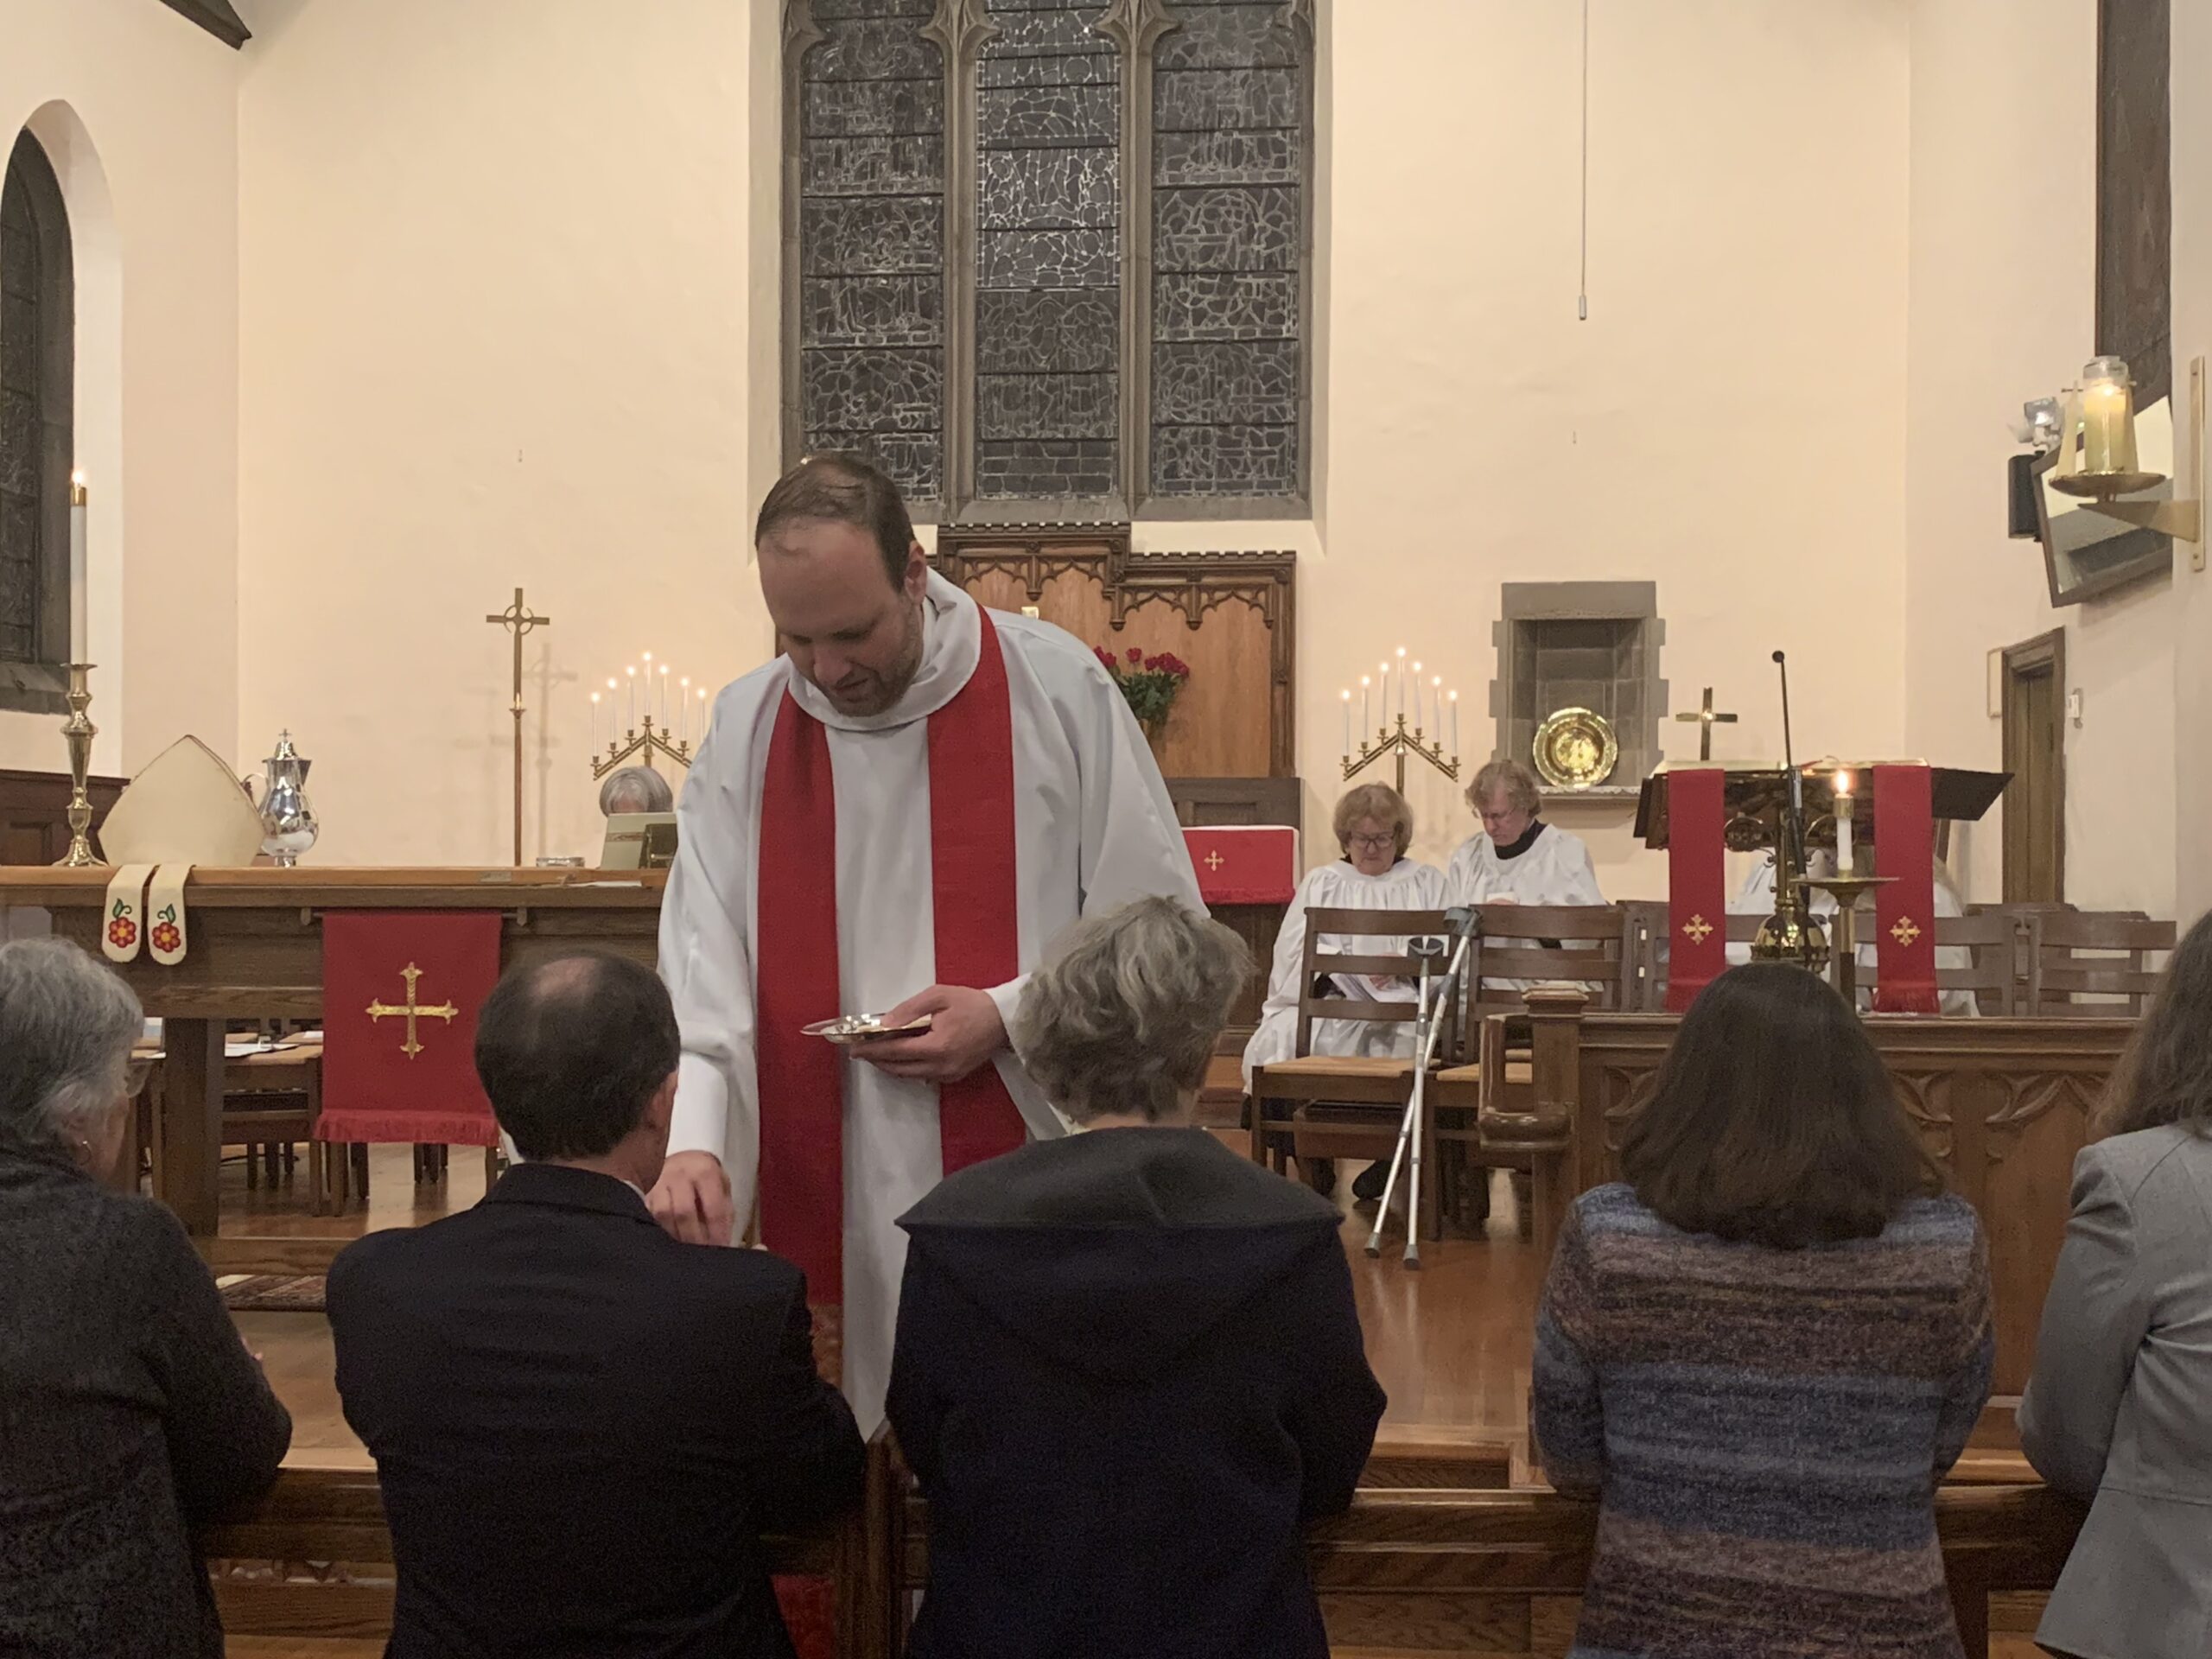 Rev. Whiteman distributes communion to parishioners at the altar rail.